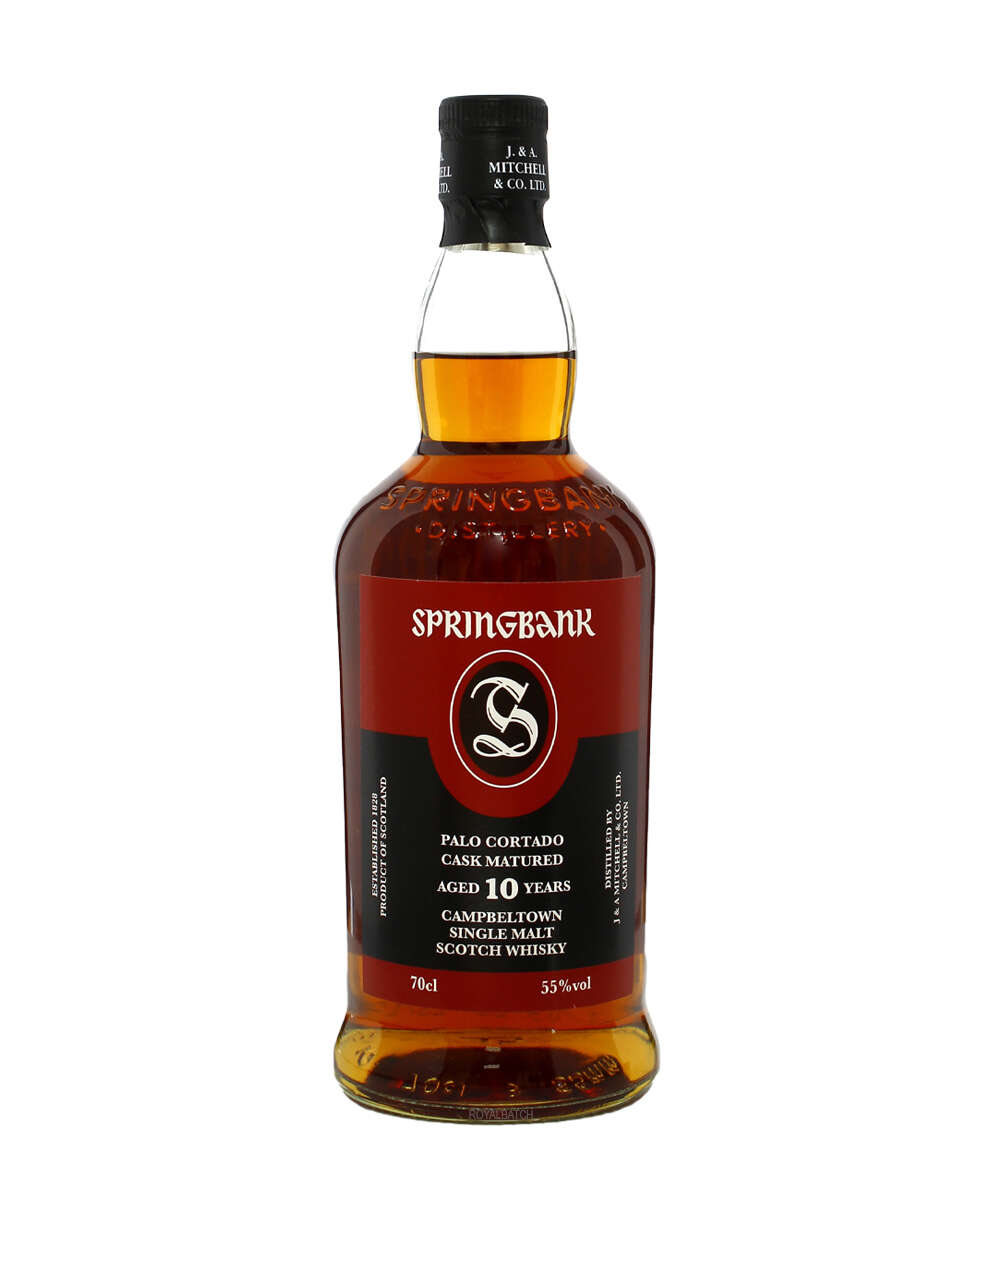 Springbank Palo Cortado Cask Matured 10 Year Old Single Malt Scotch Whisky